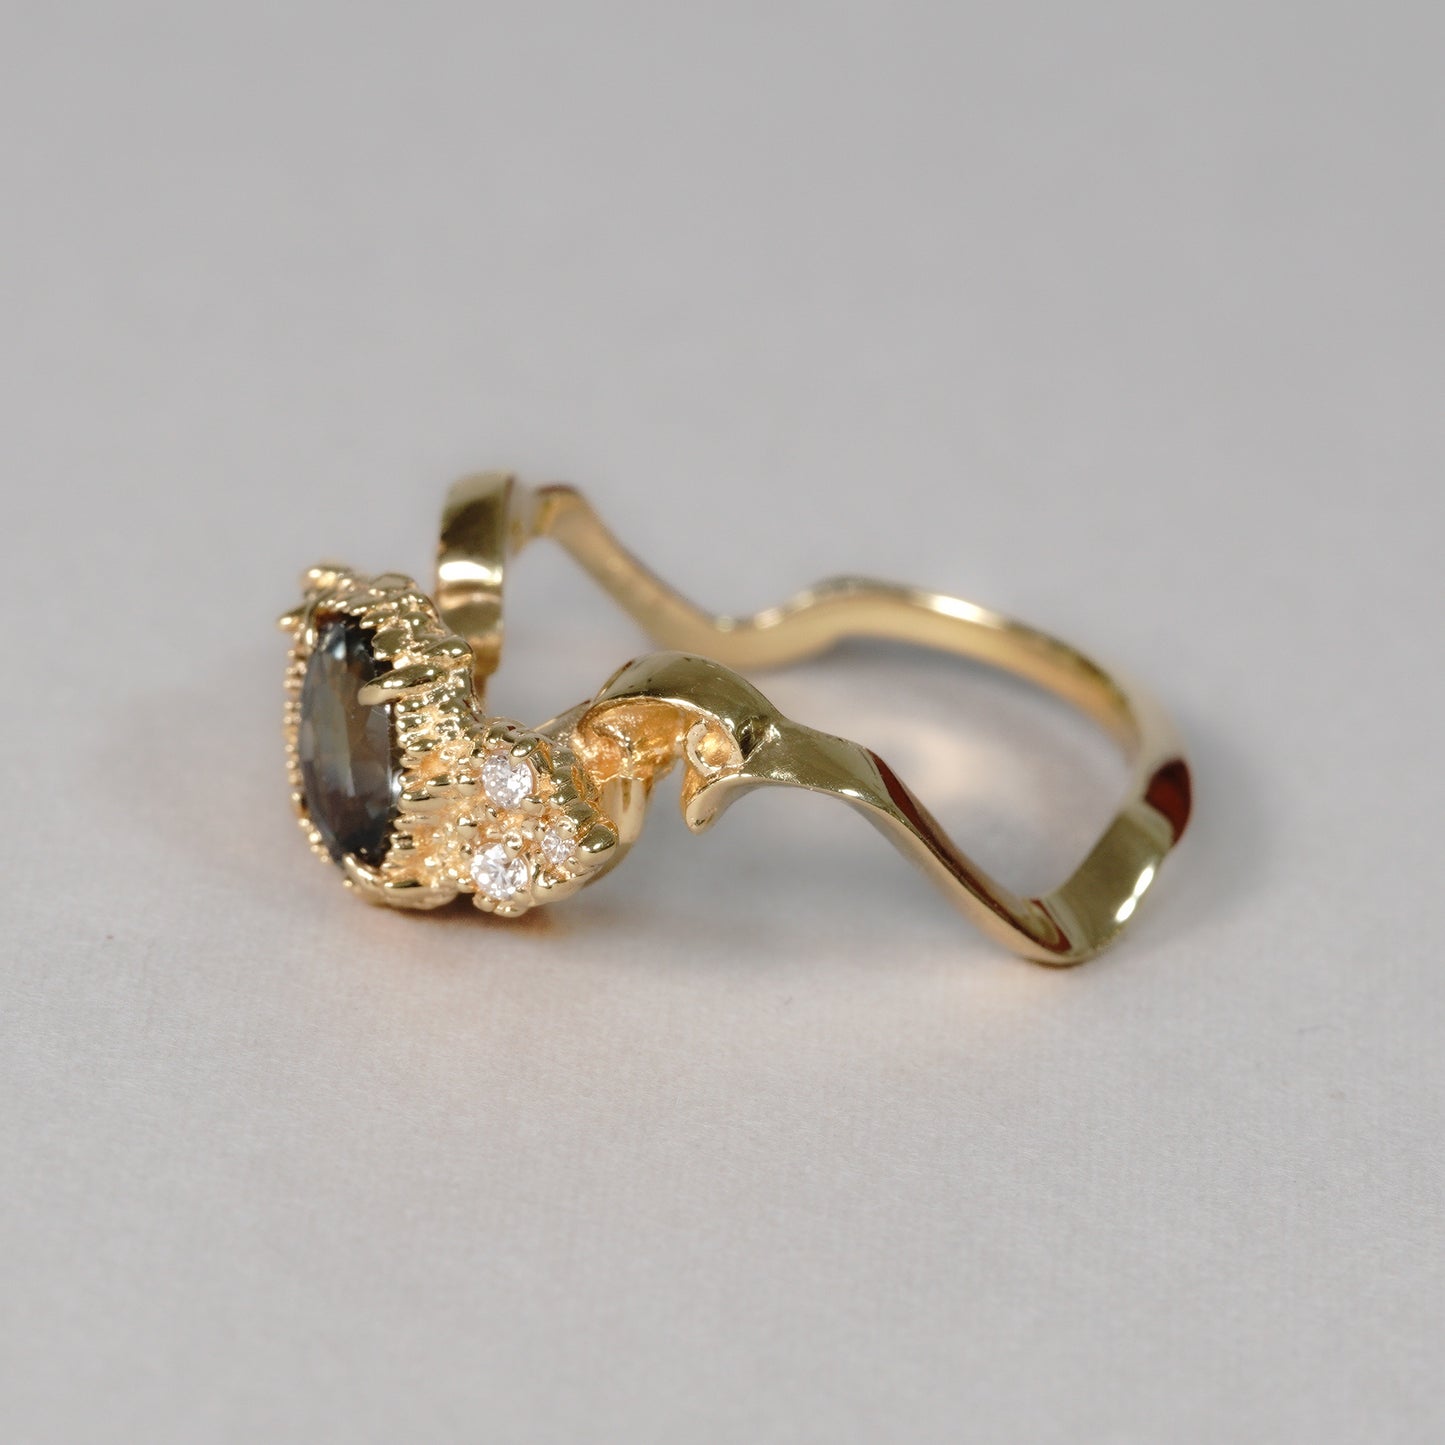 001 Color change sapphire / Diamond Ring